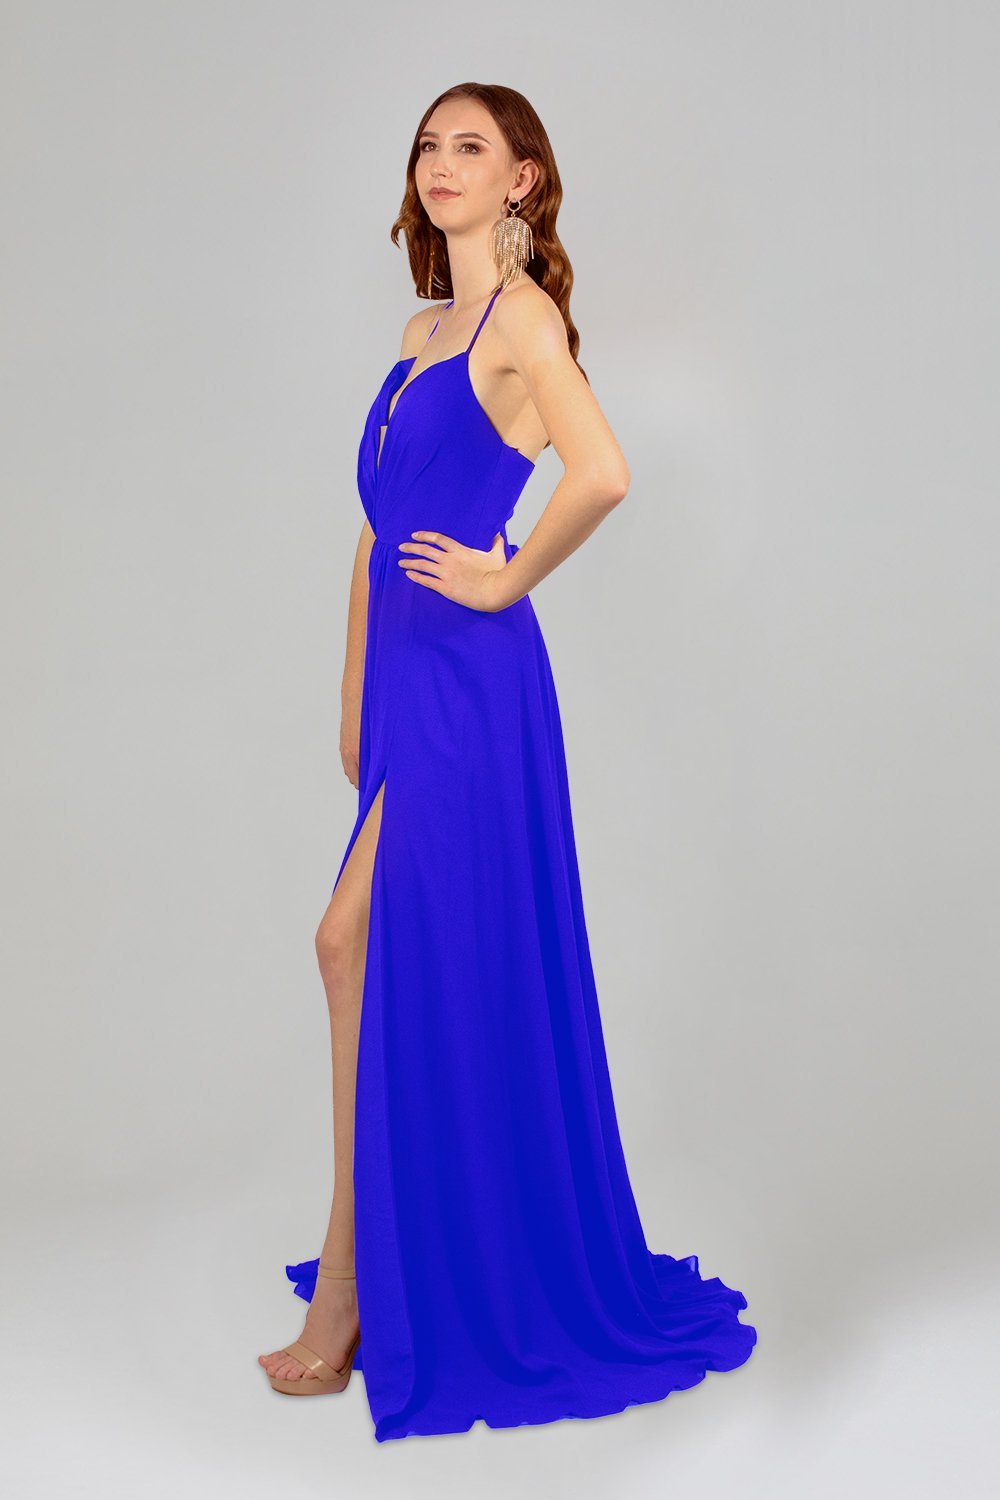 royal blue bridesmaid dresses perth australia online envious bridal & formal